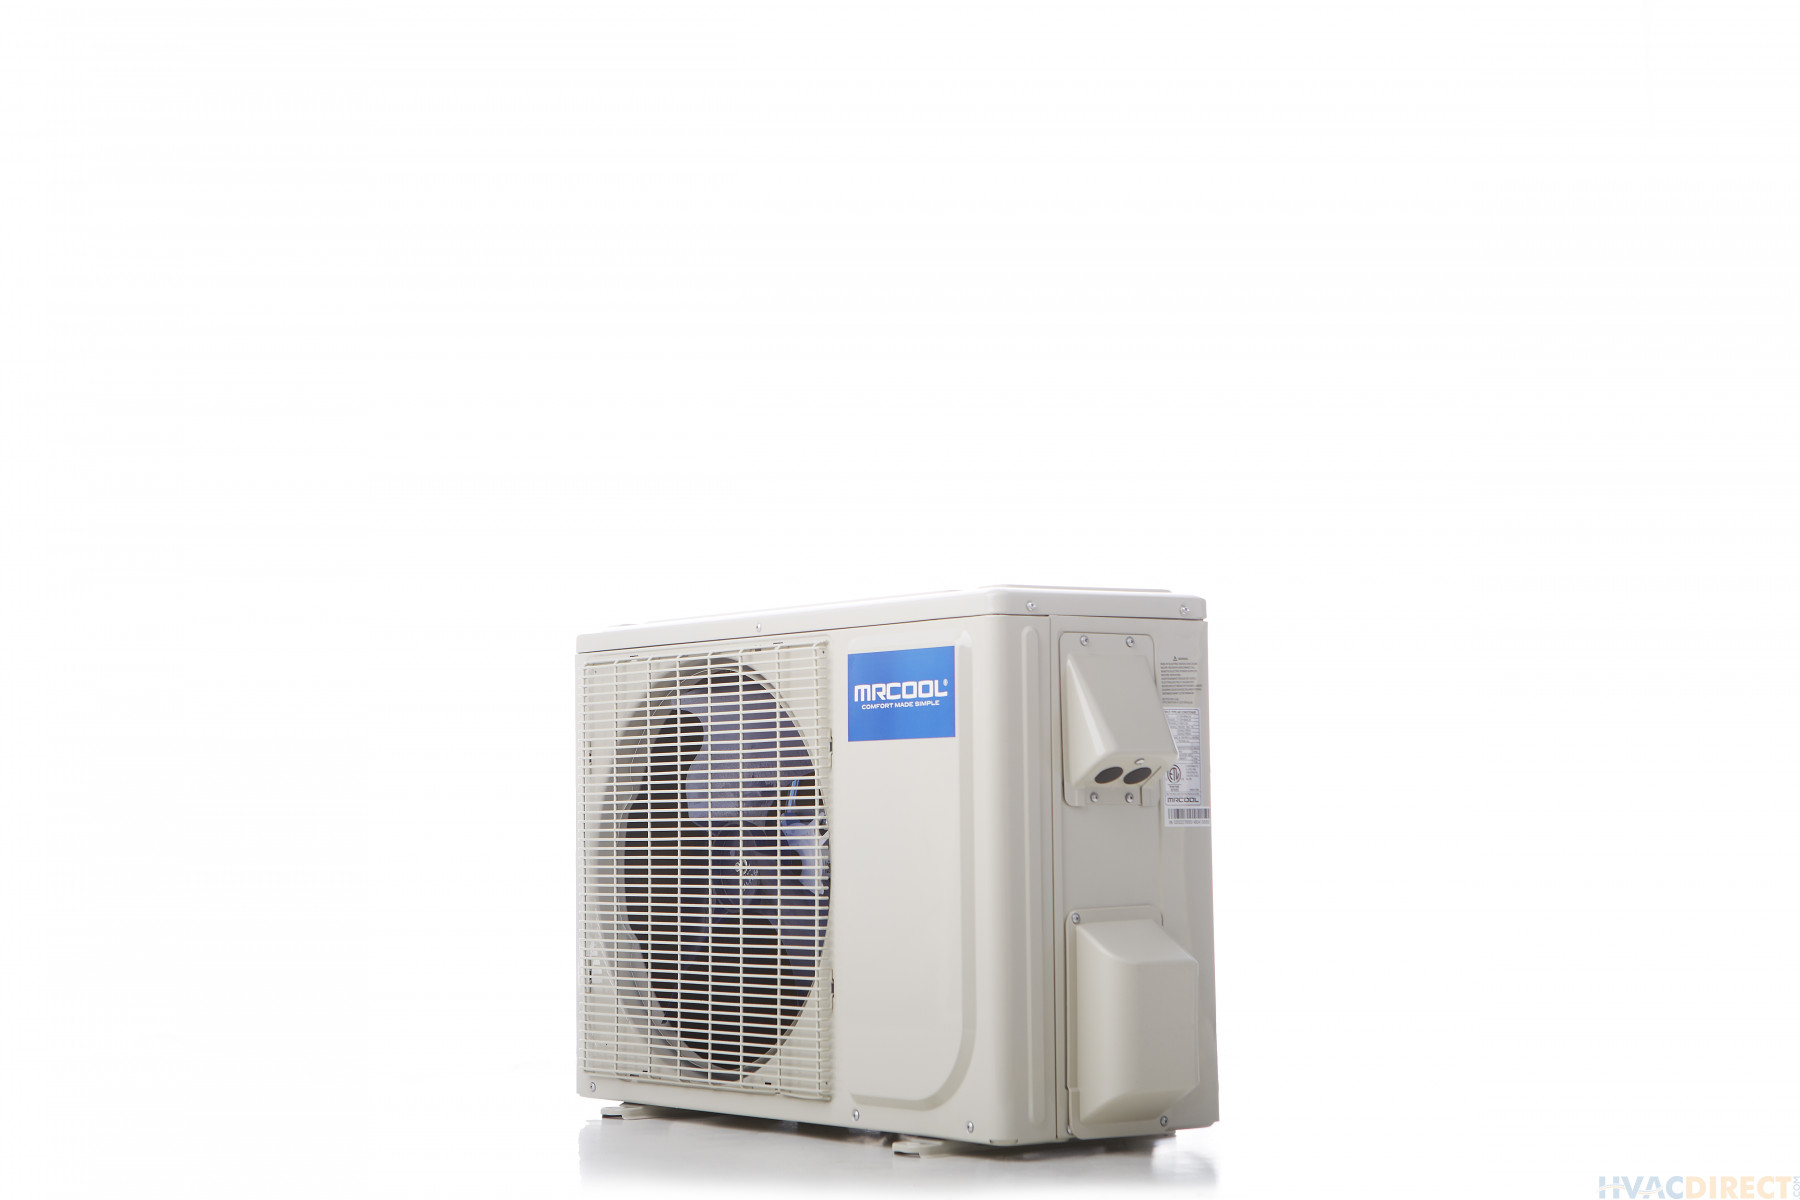 MRCOOL Oasis Hyper Heat 18,000 BTU 1.5 Ton Ductless Mini-Split Heat Pump